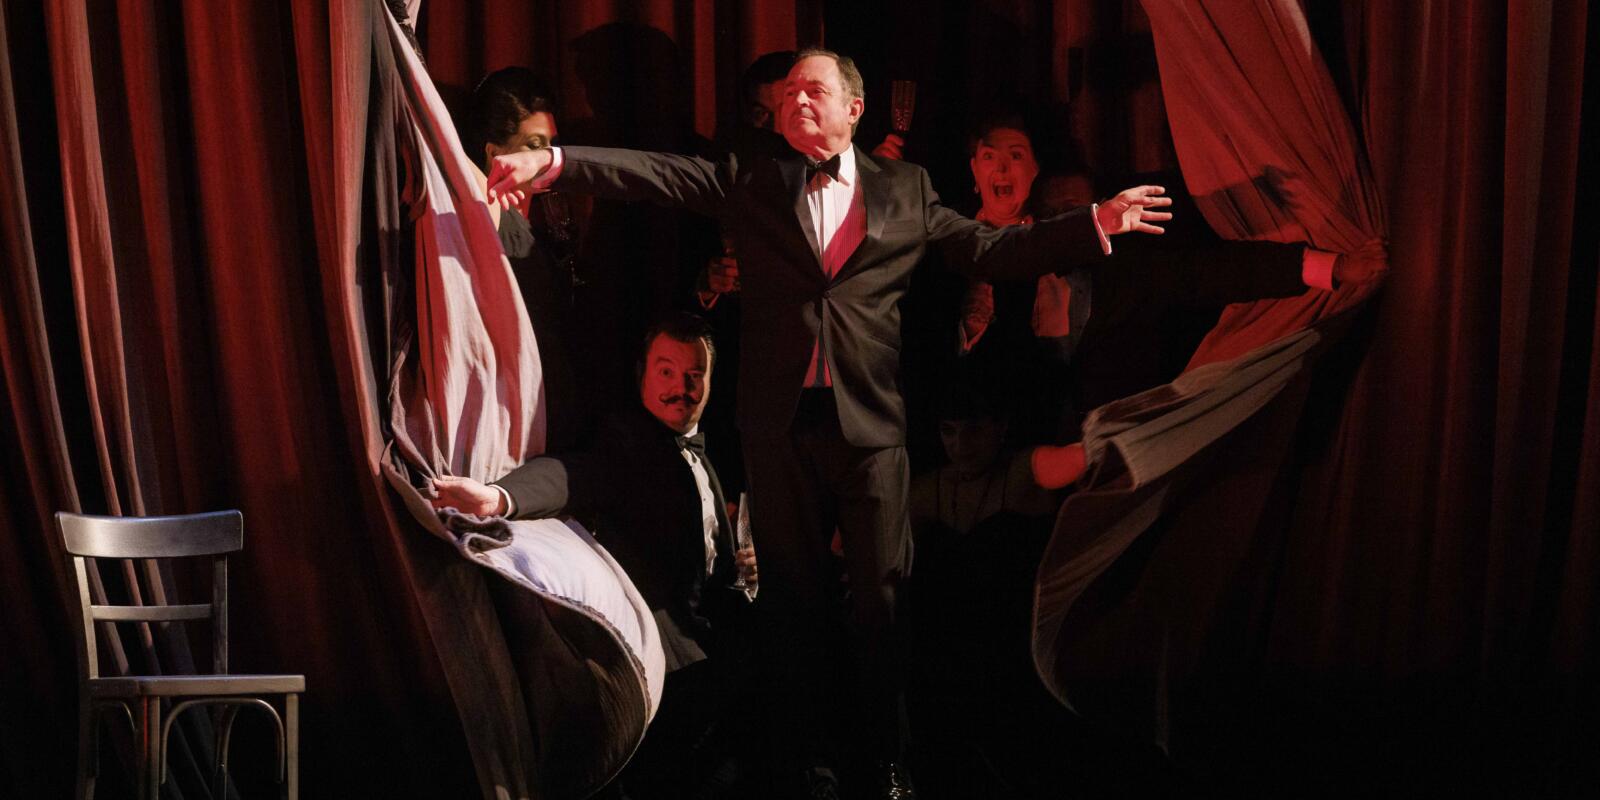 English National Opera (ENO) presents La Traviata at the London Coliseum, which runs from Monday 23rd October.